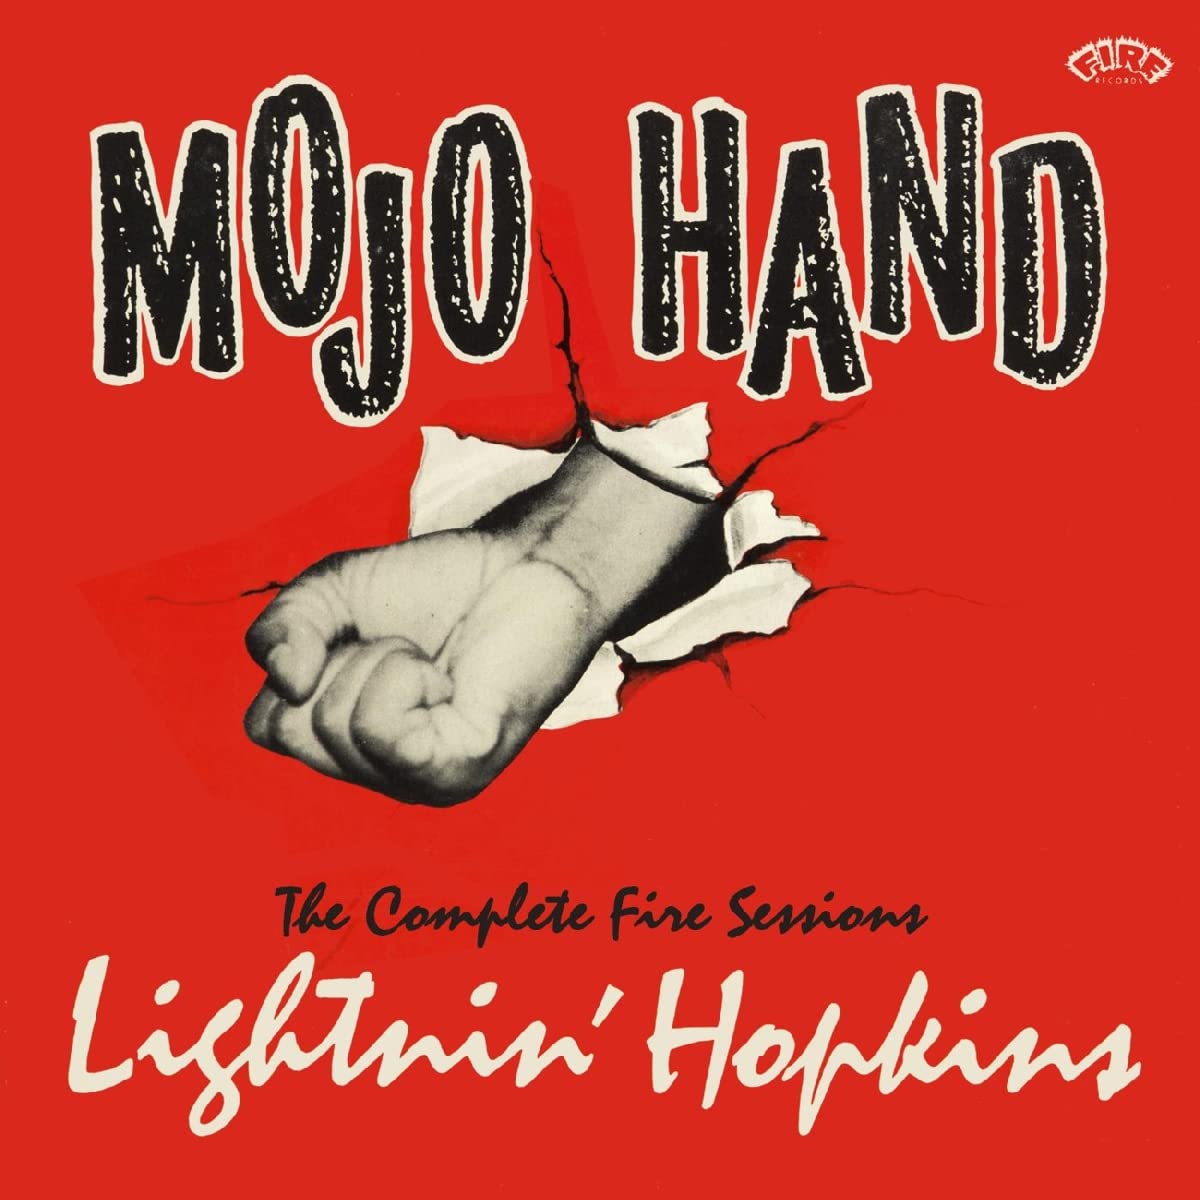 Lightnin’ Hopkins - Mojo Hand - The Complete Fire Sessions